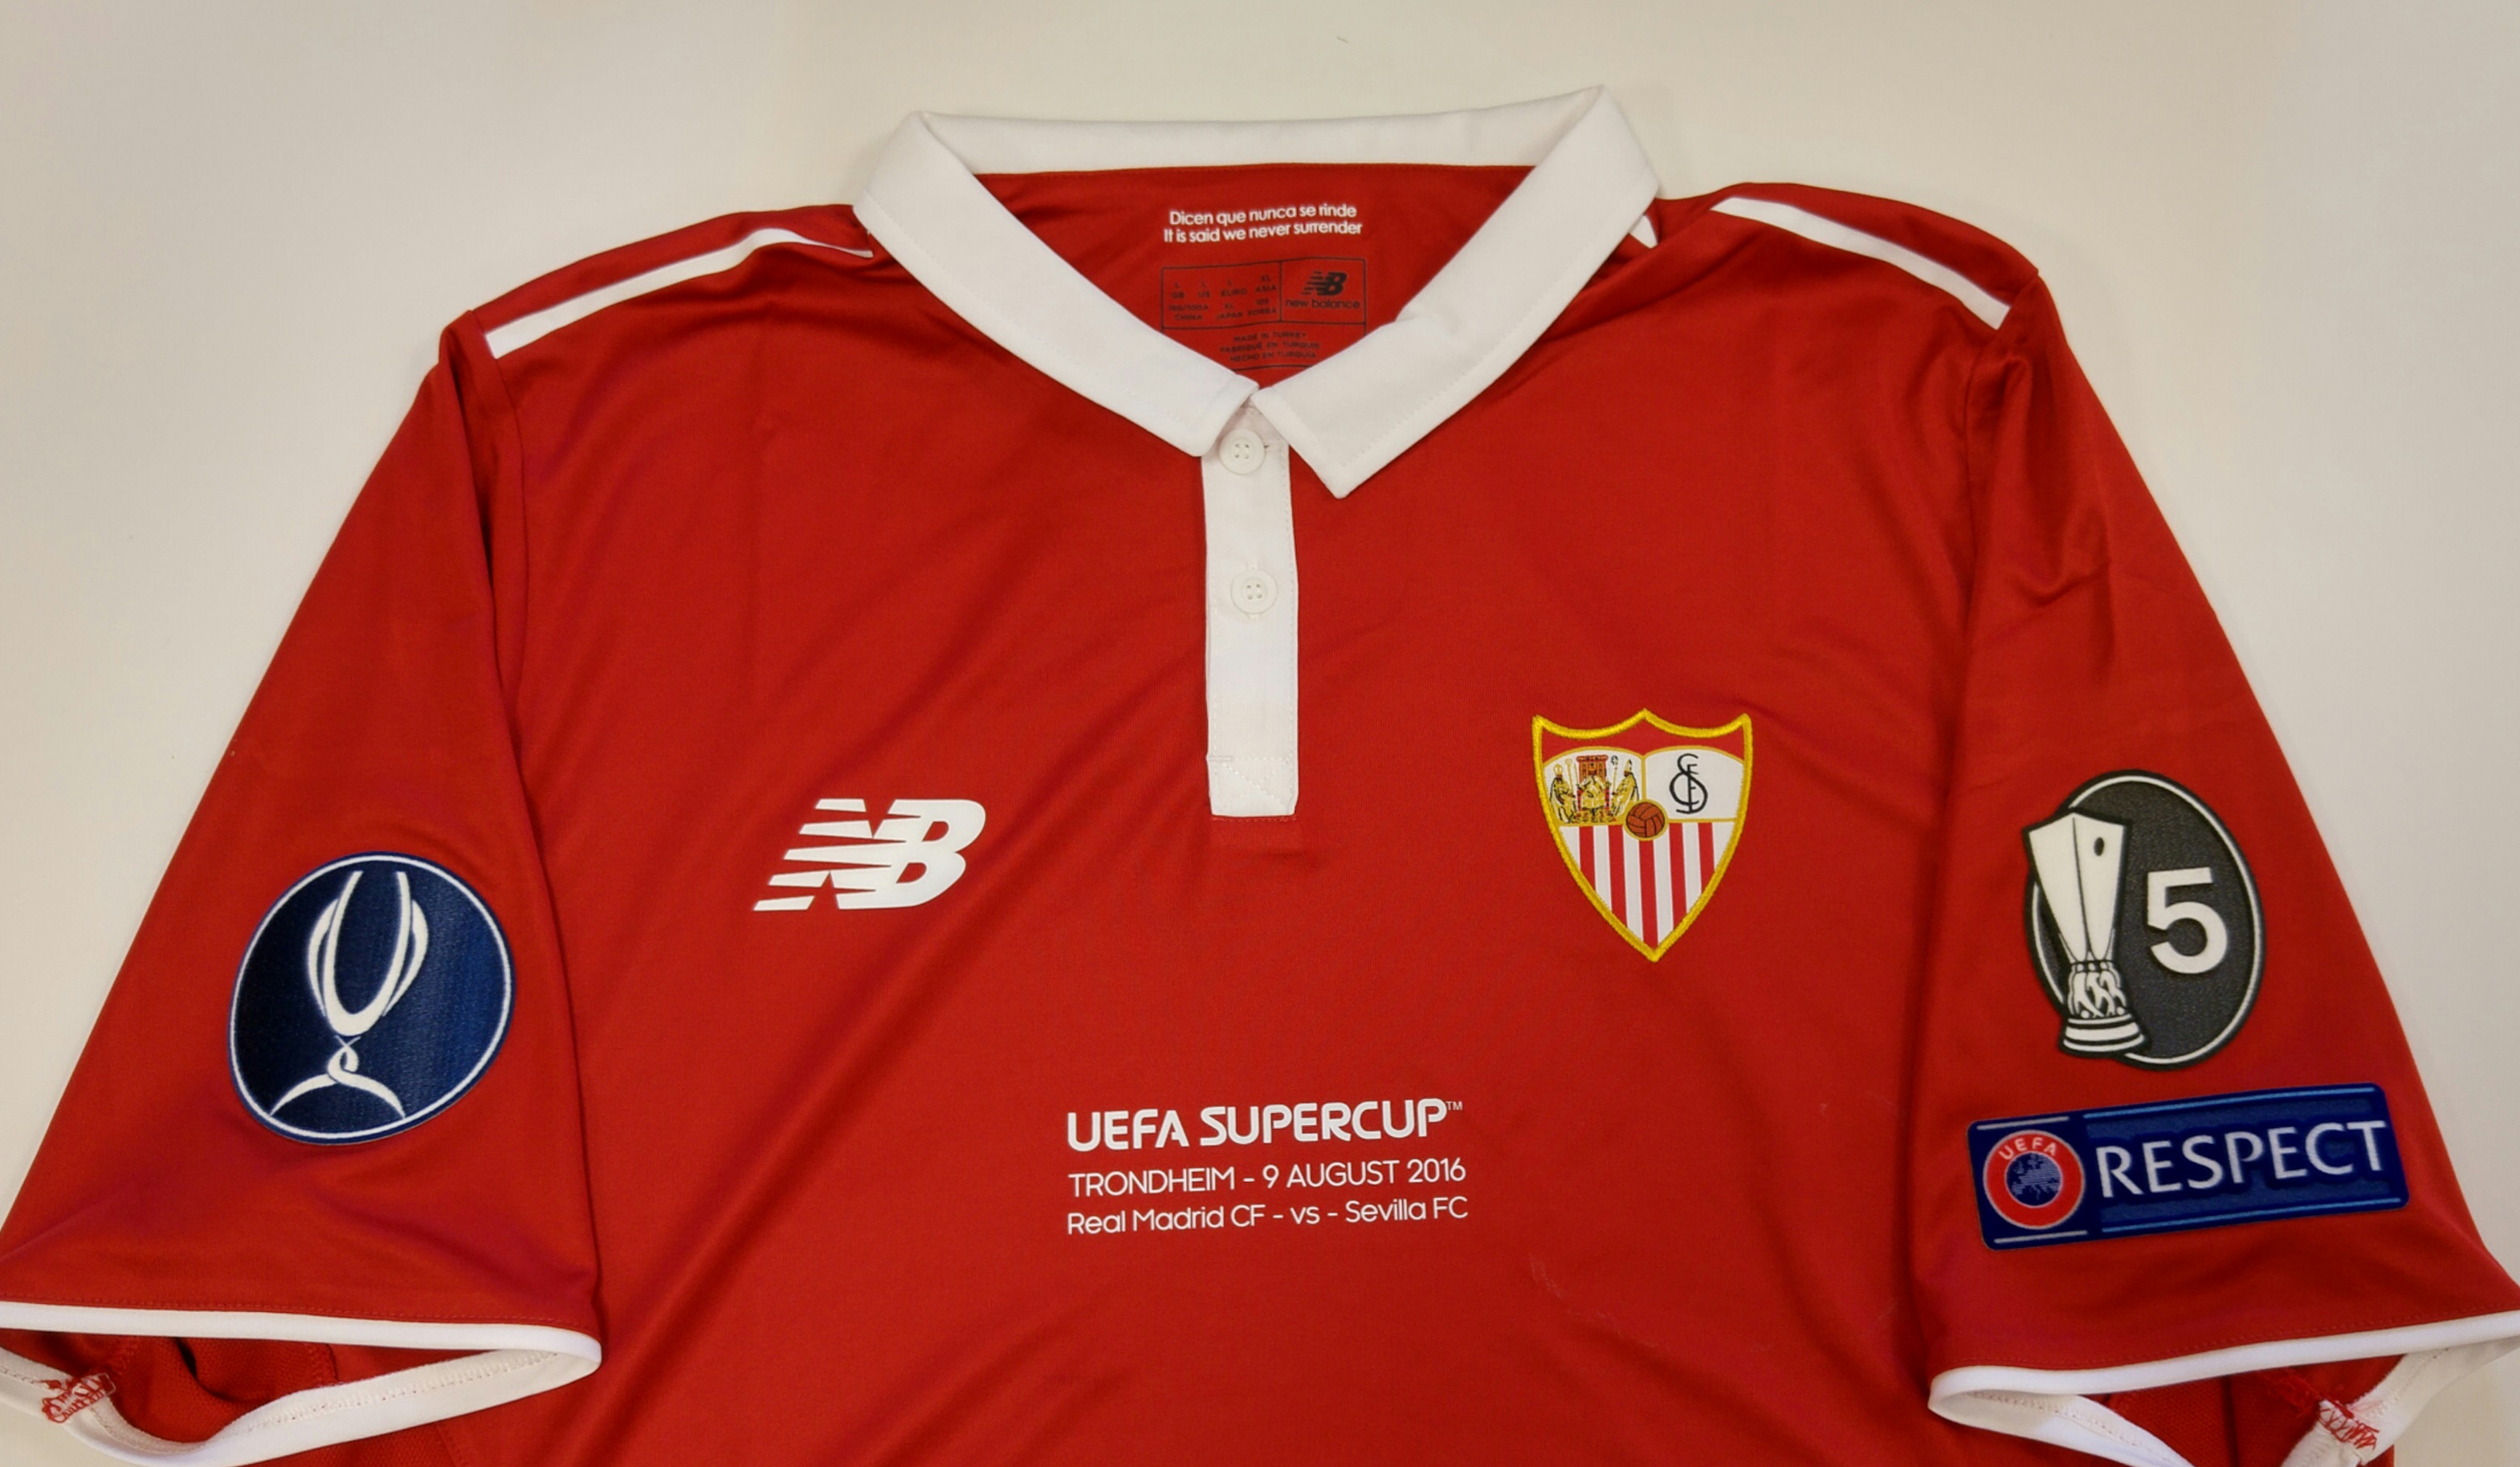 Parche de la Europa League en la camiseta del Sevilla FC